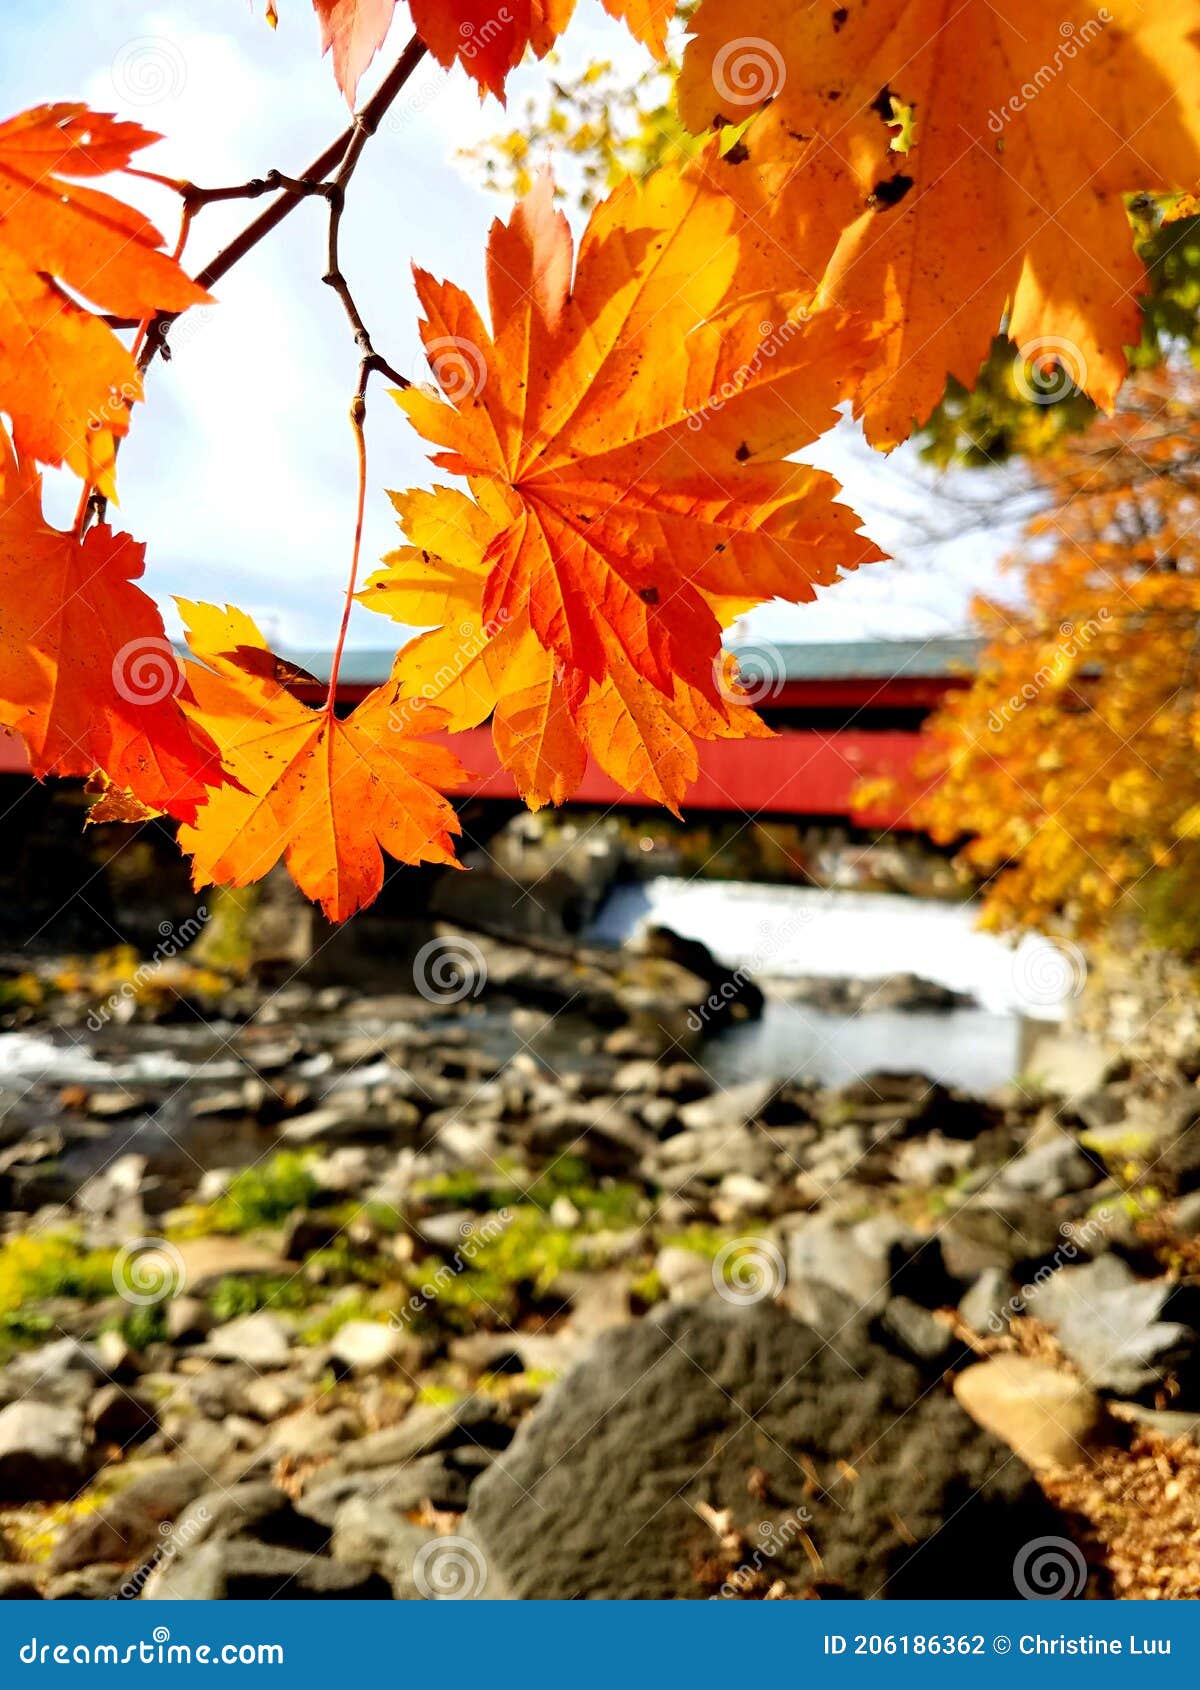 Bridge Through Fall Leaves Stock Photo Image Of Maple 206186362